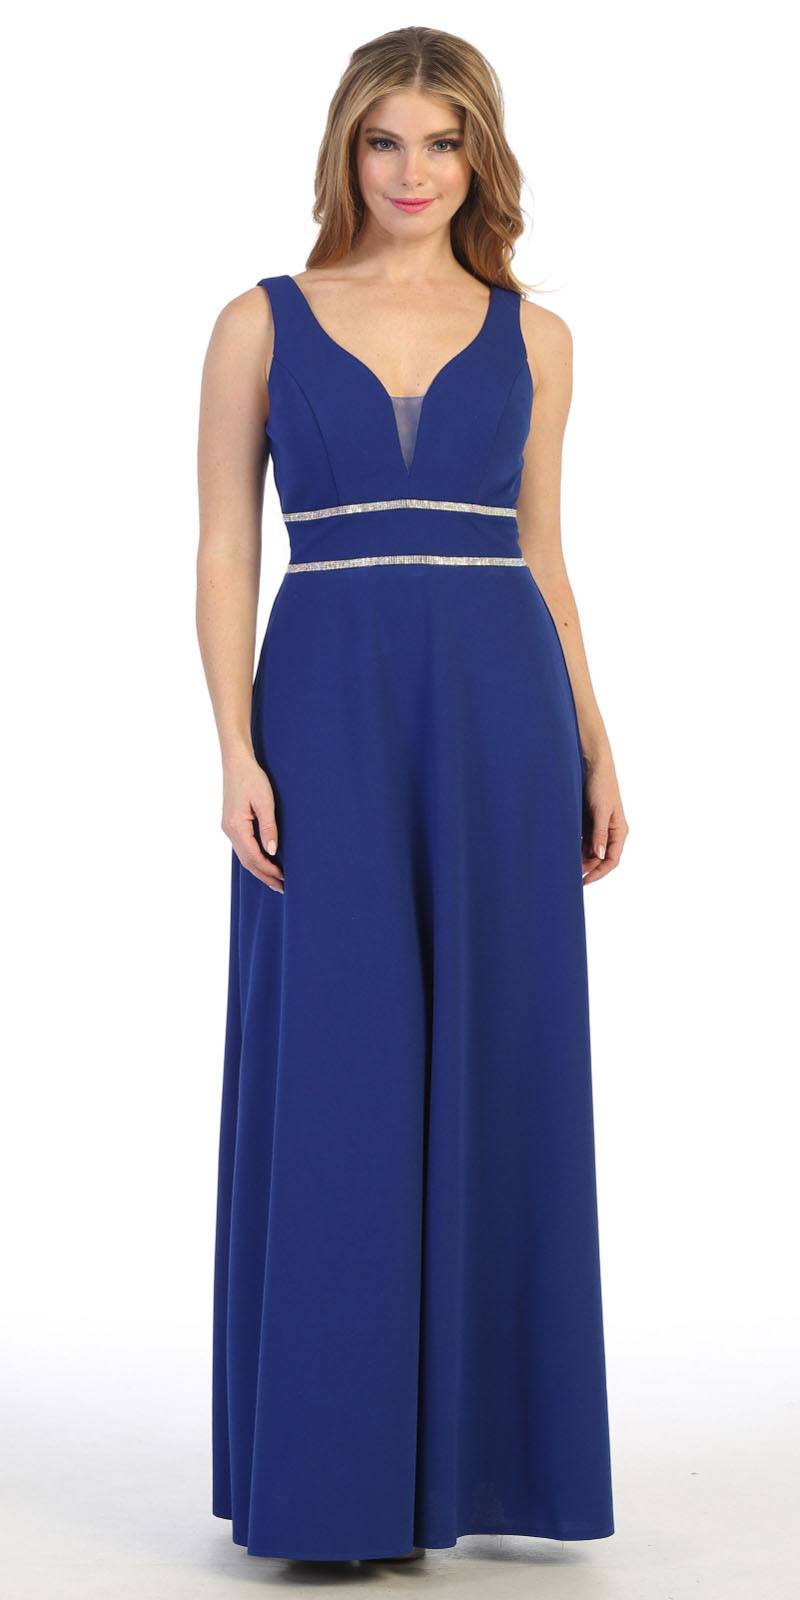 Sleeveless V-Neck and Back Long Formal Dress Royal Blue